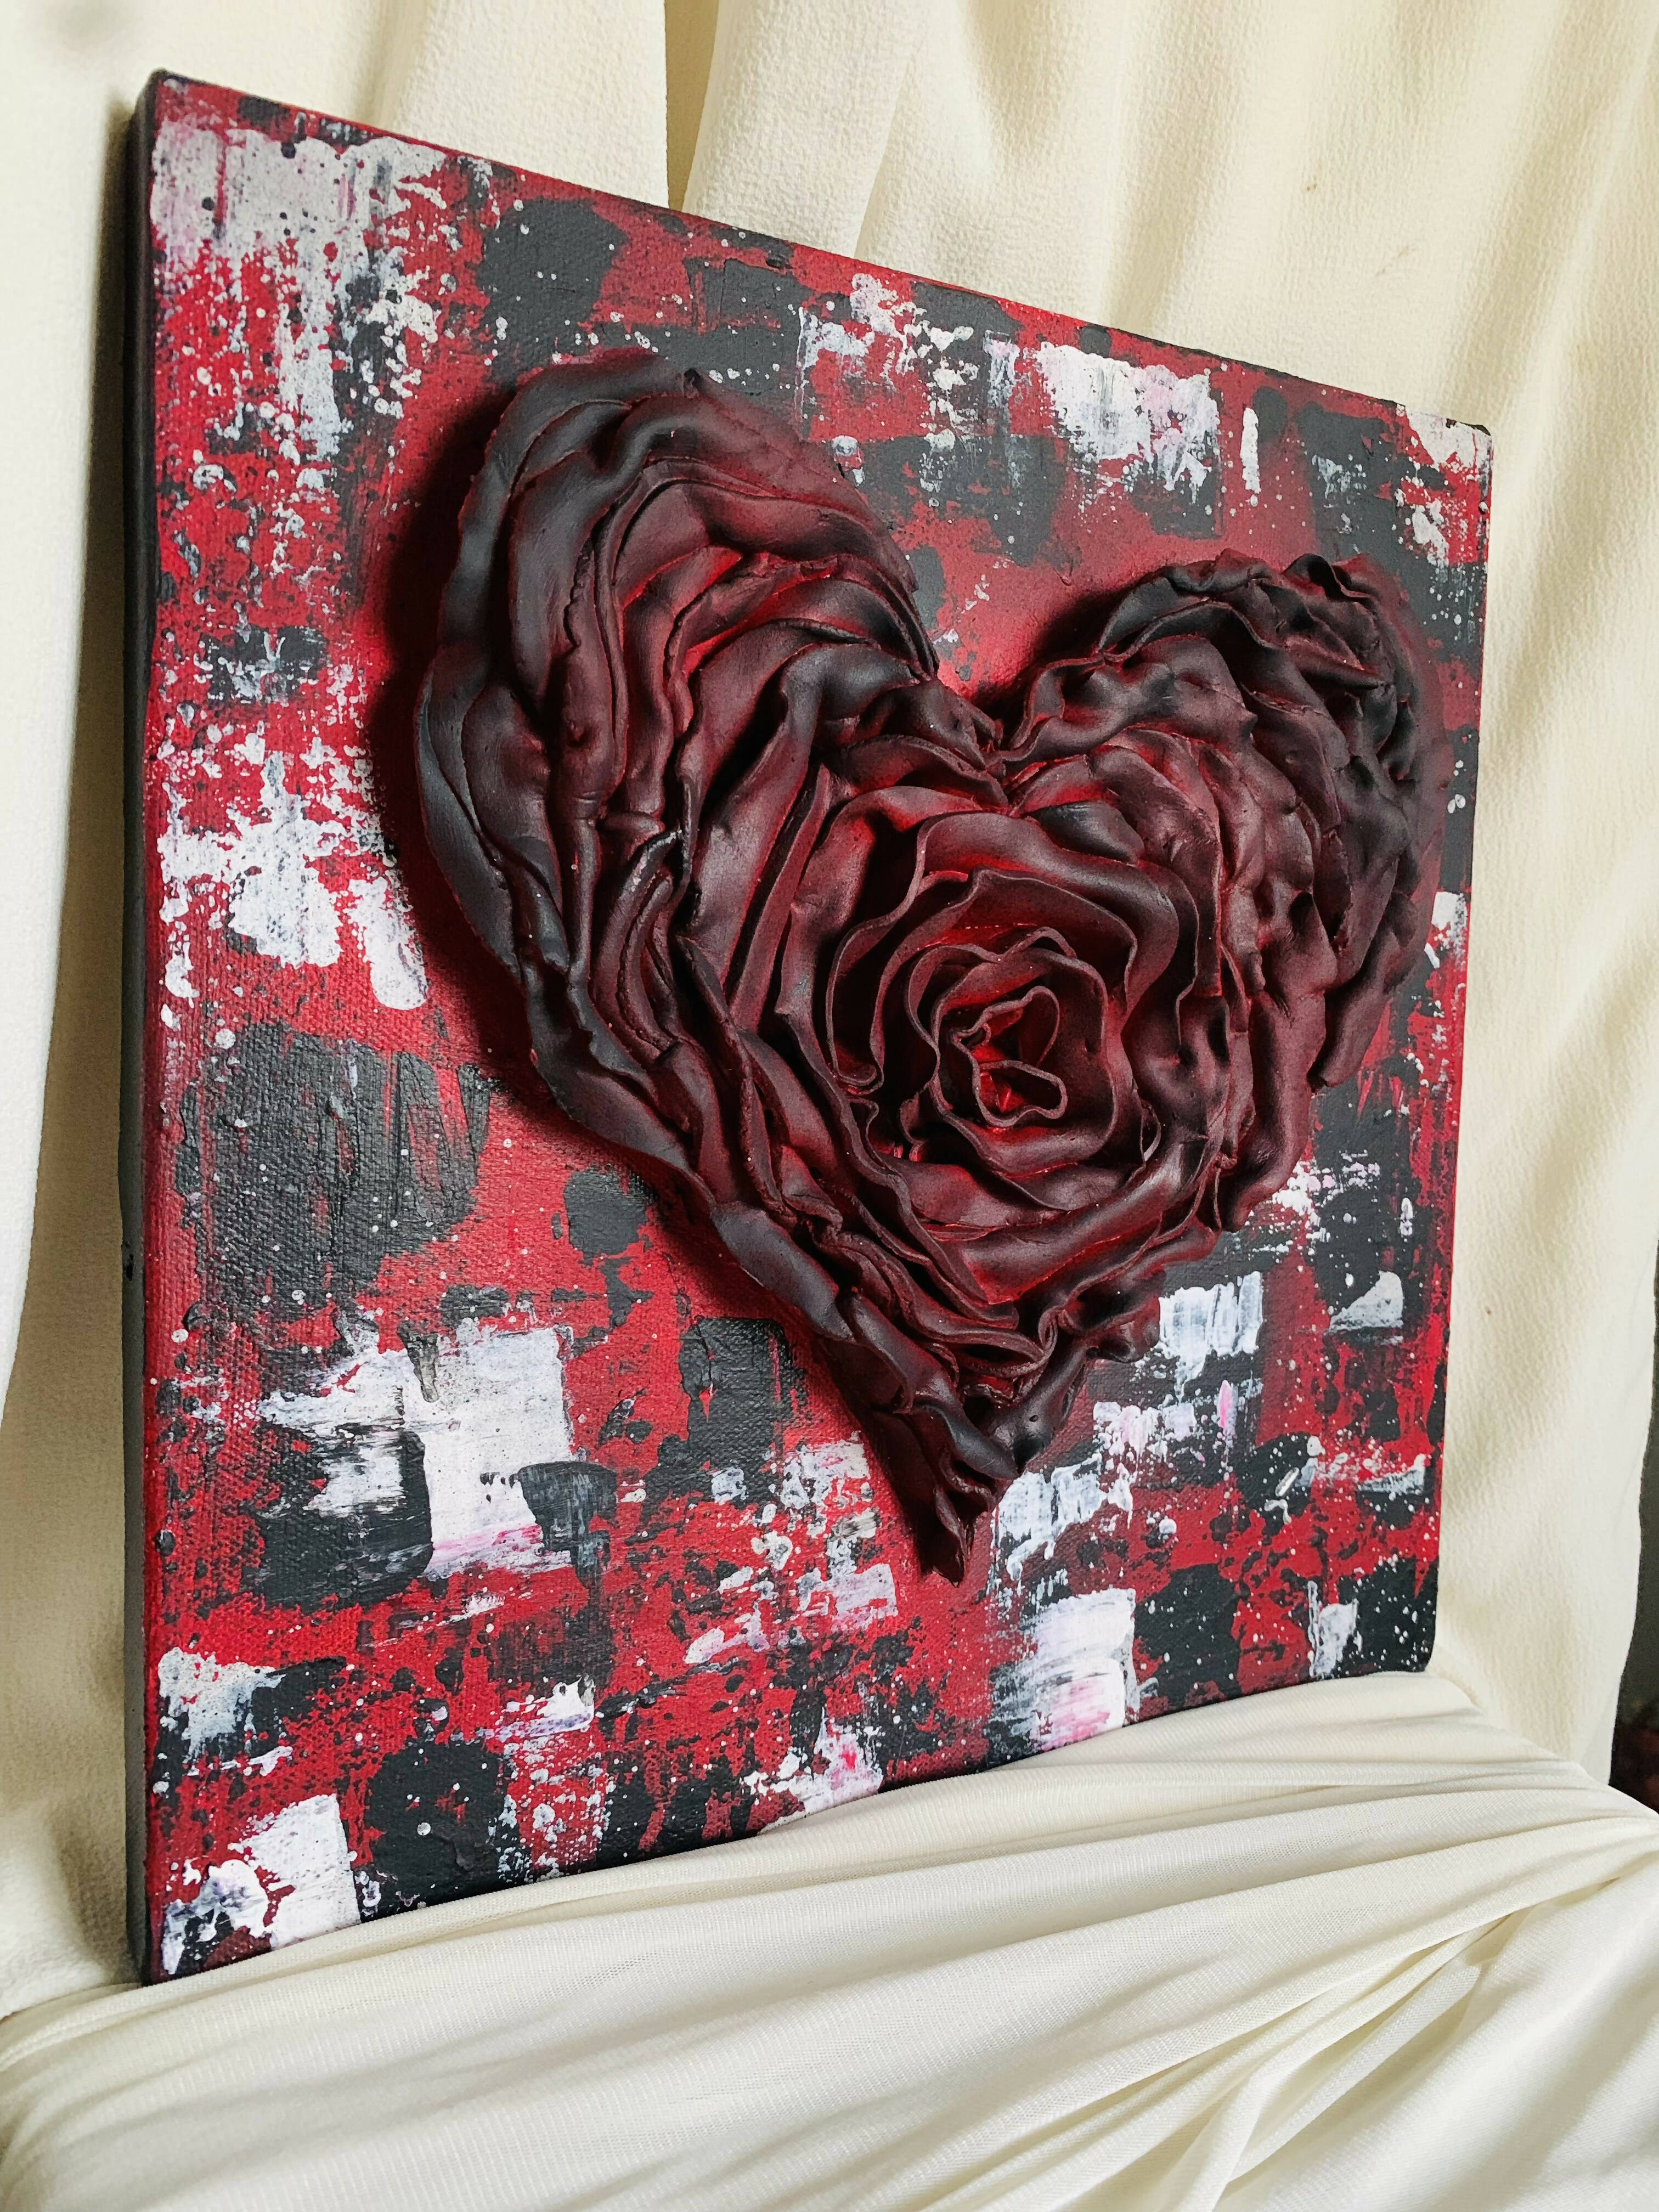 RUSTIC HEART OF ROSE 3D ART